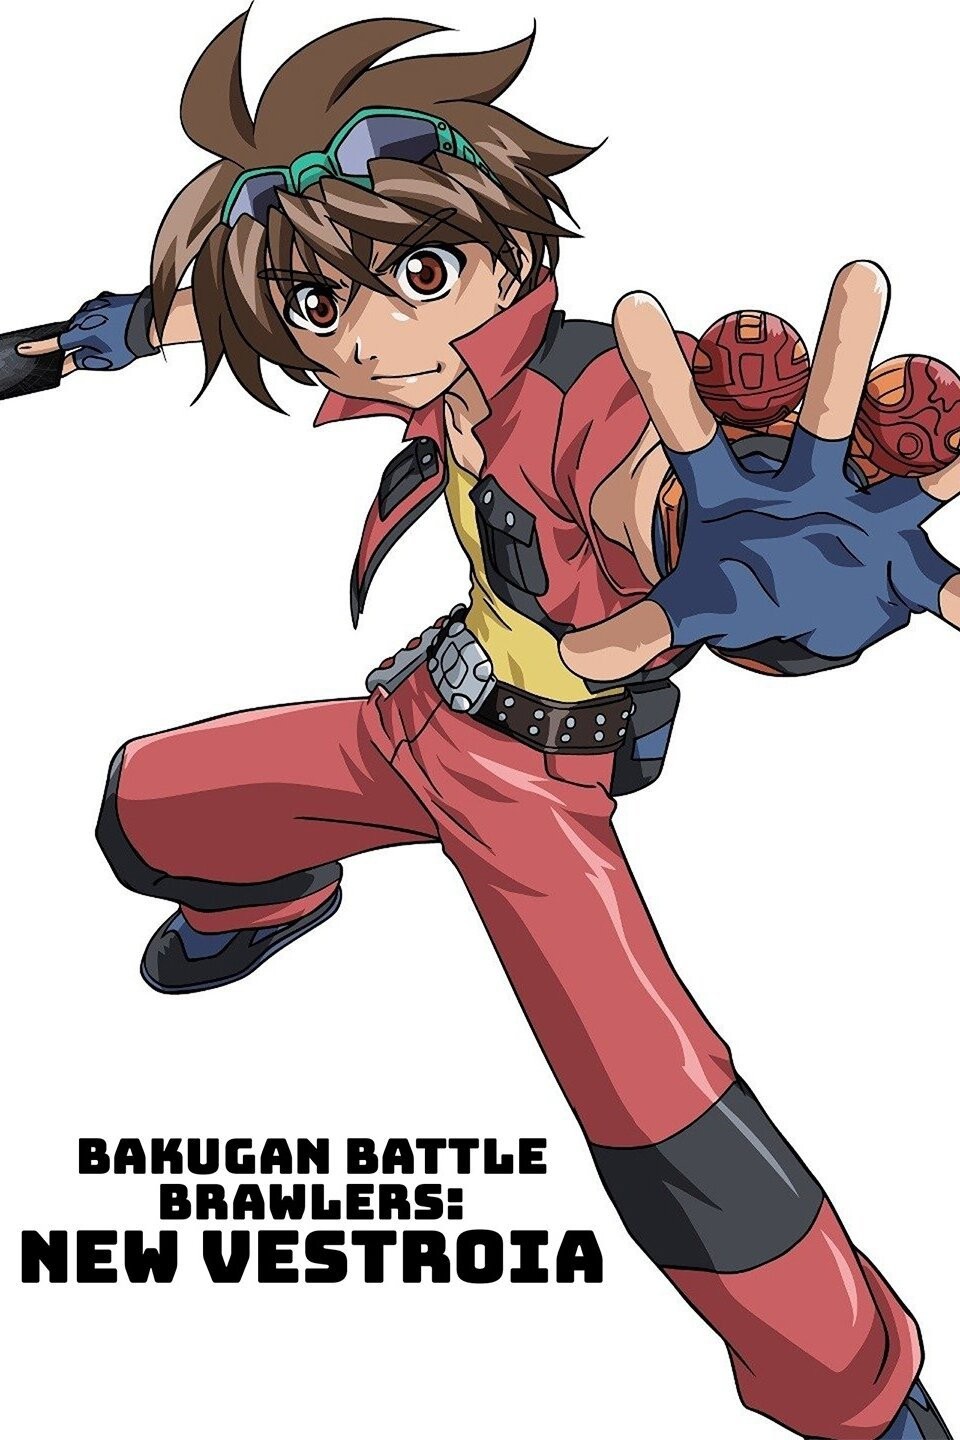 BAKUGAN Battle Brawlers Episode 2 (bakugan toys and battles) 